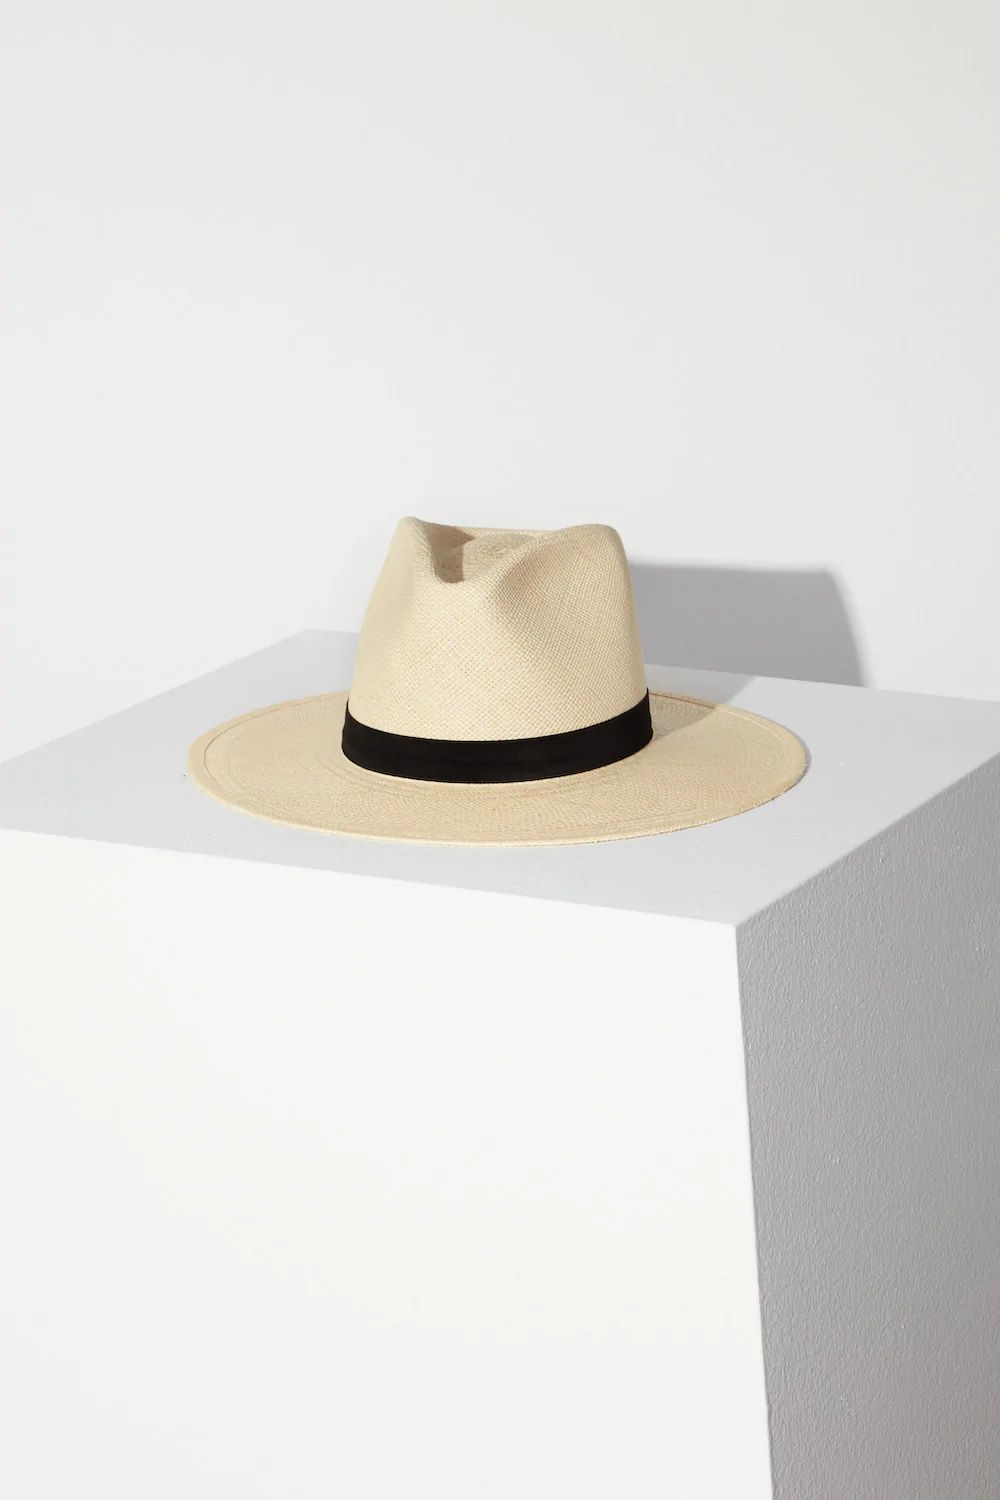 Vija Hat | Janessa Leone